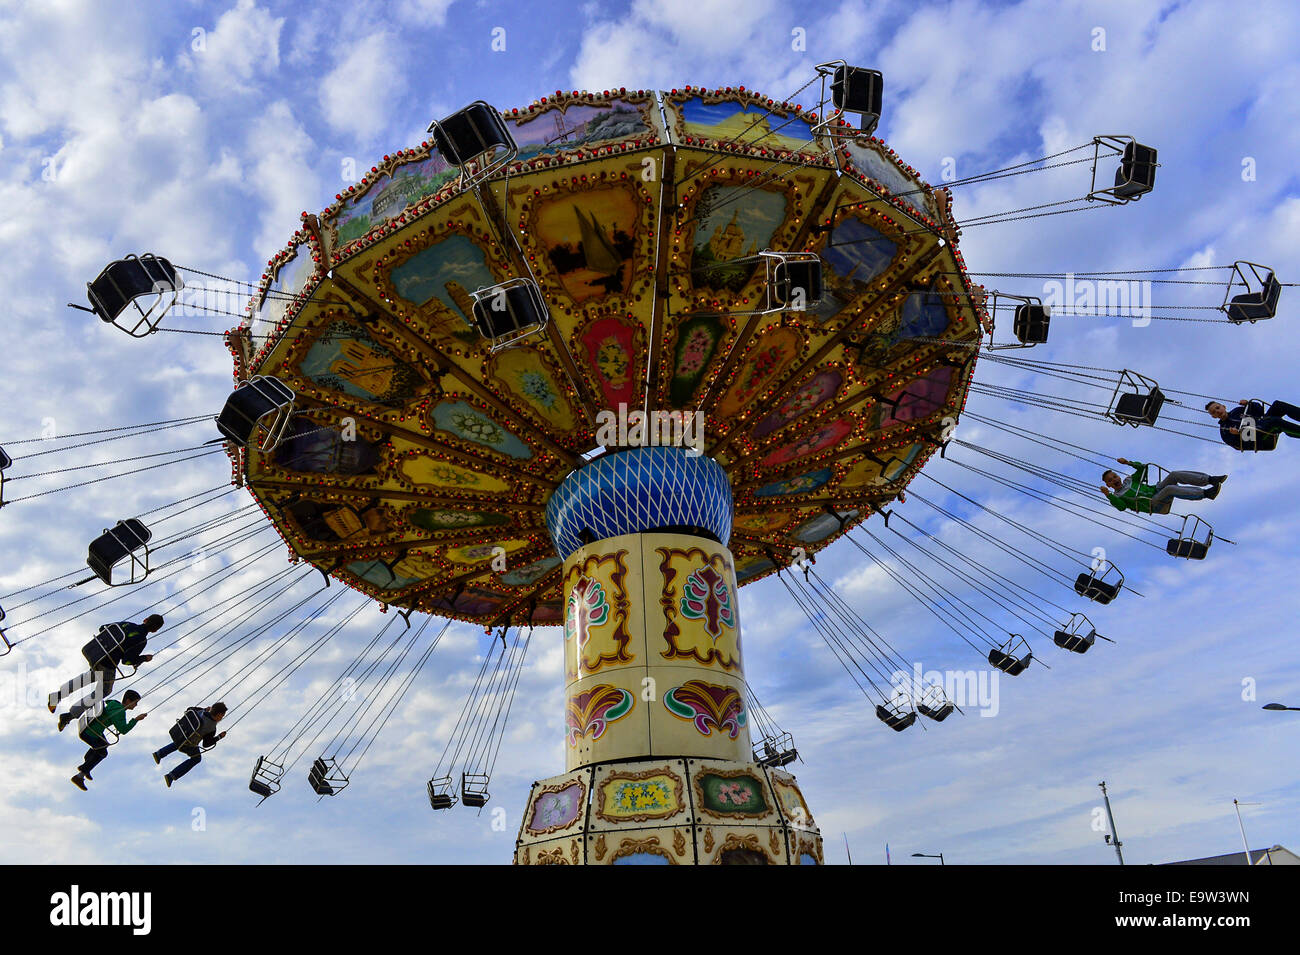 Stock Photo - Fairground carousel de filature. ©George Sweeney/Alamy Banque D'Images